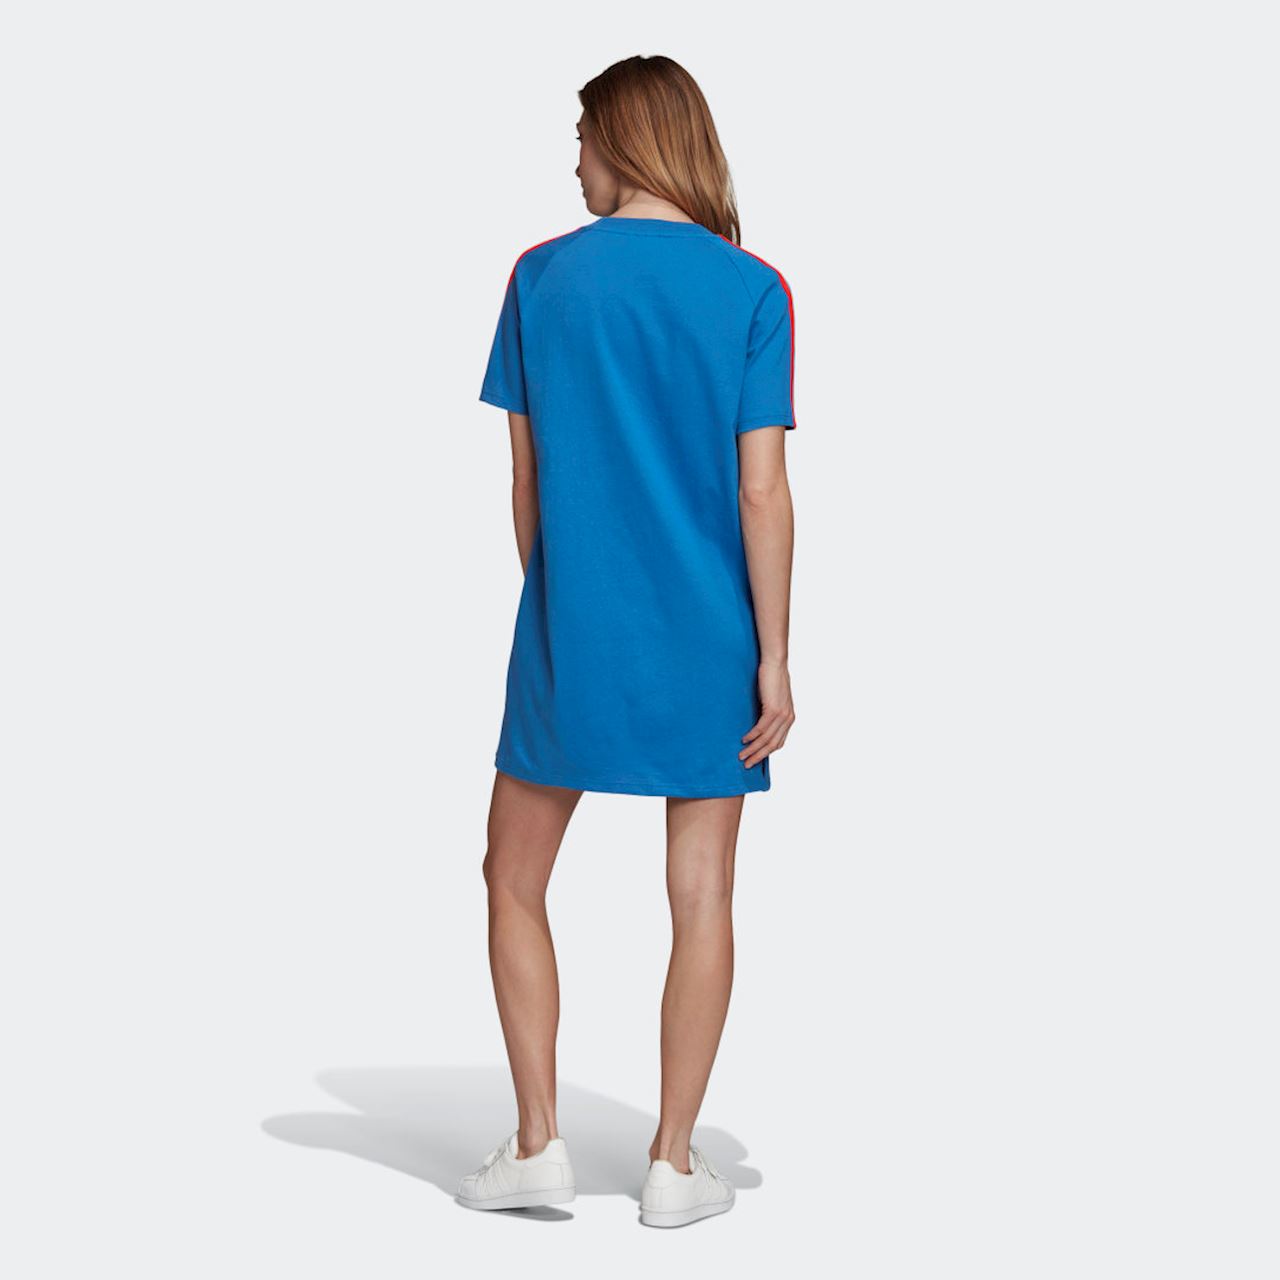 tradesports.co.uk Adidas Originals Women's Italy Tee Dress - Blue